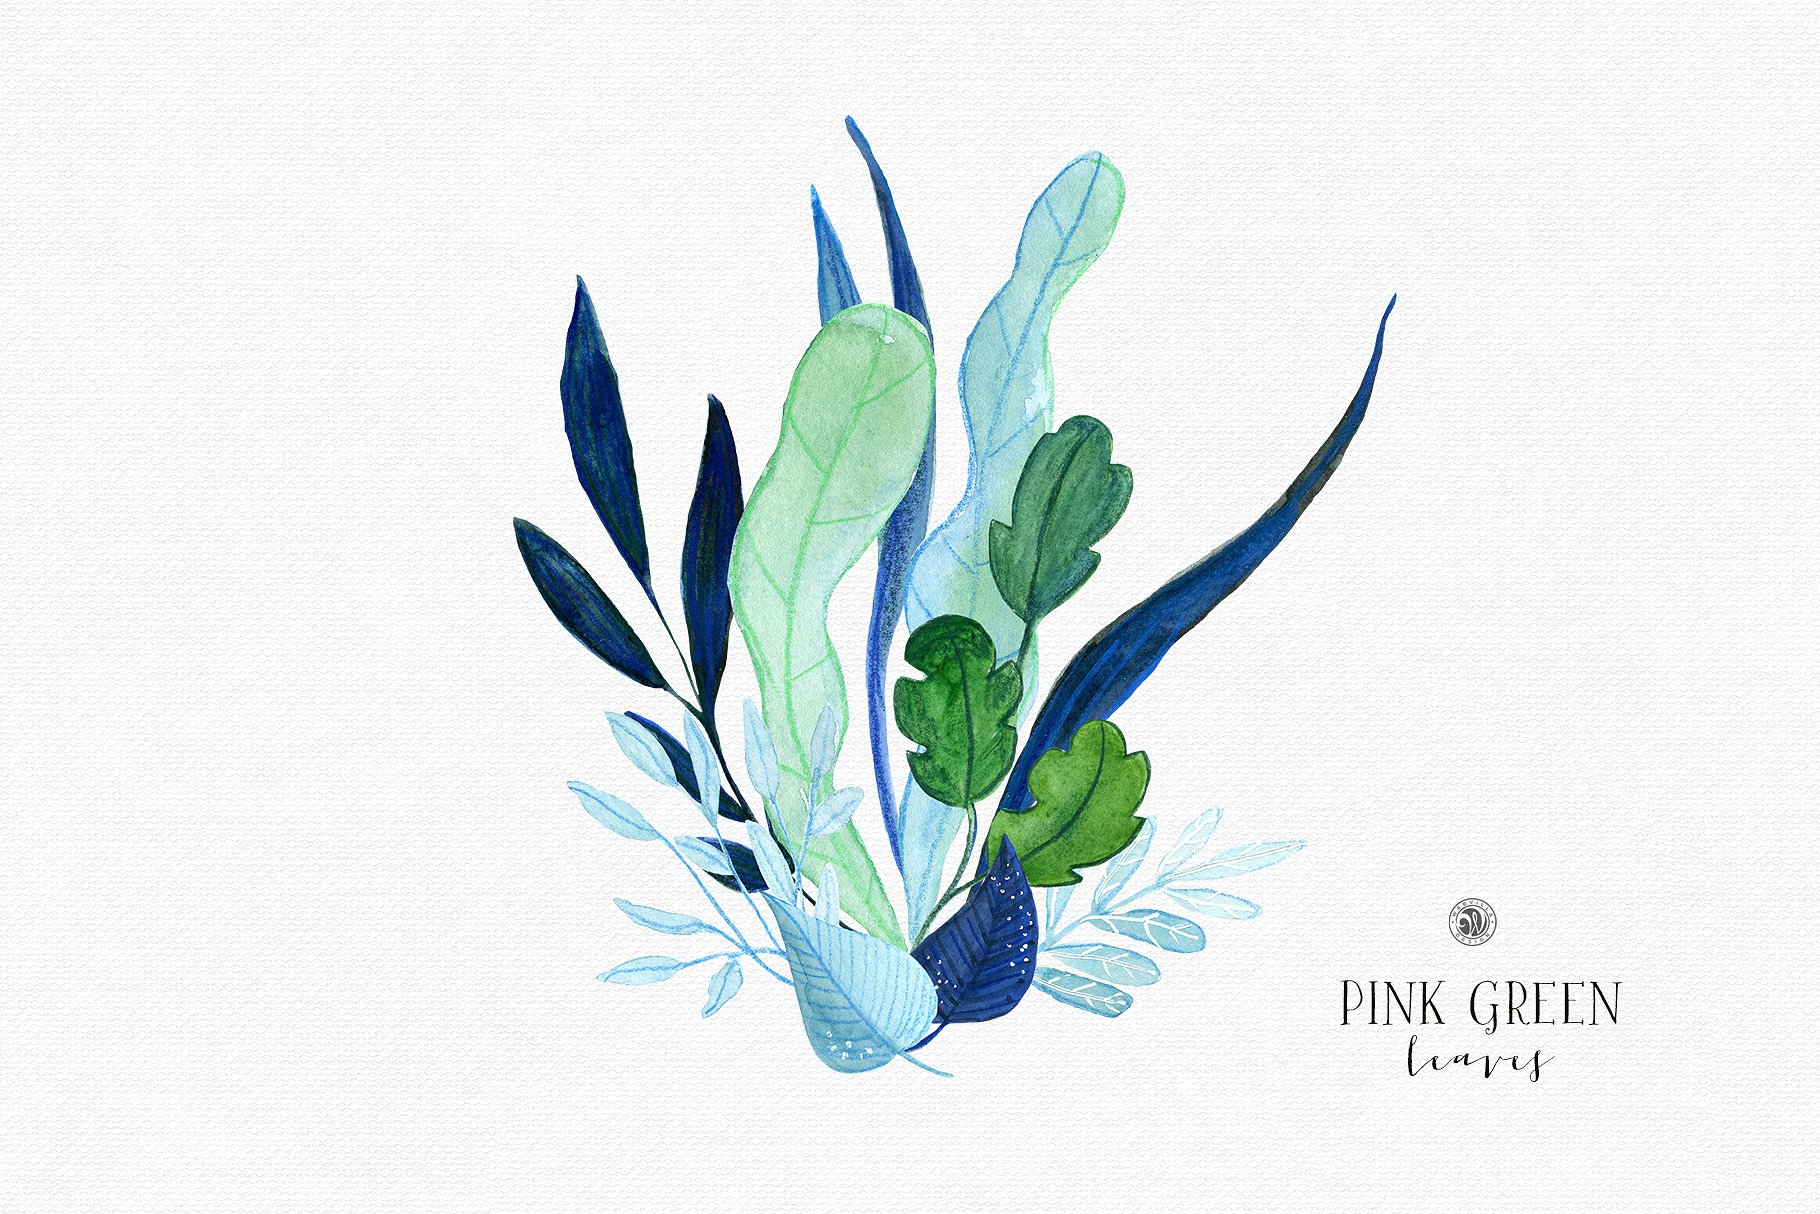 水彩手绘粉绿色叶子插画合集 Pink Green Leaves插图(2)